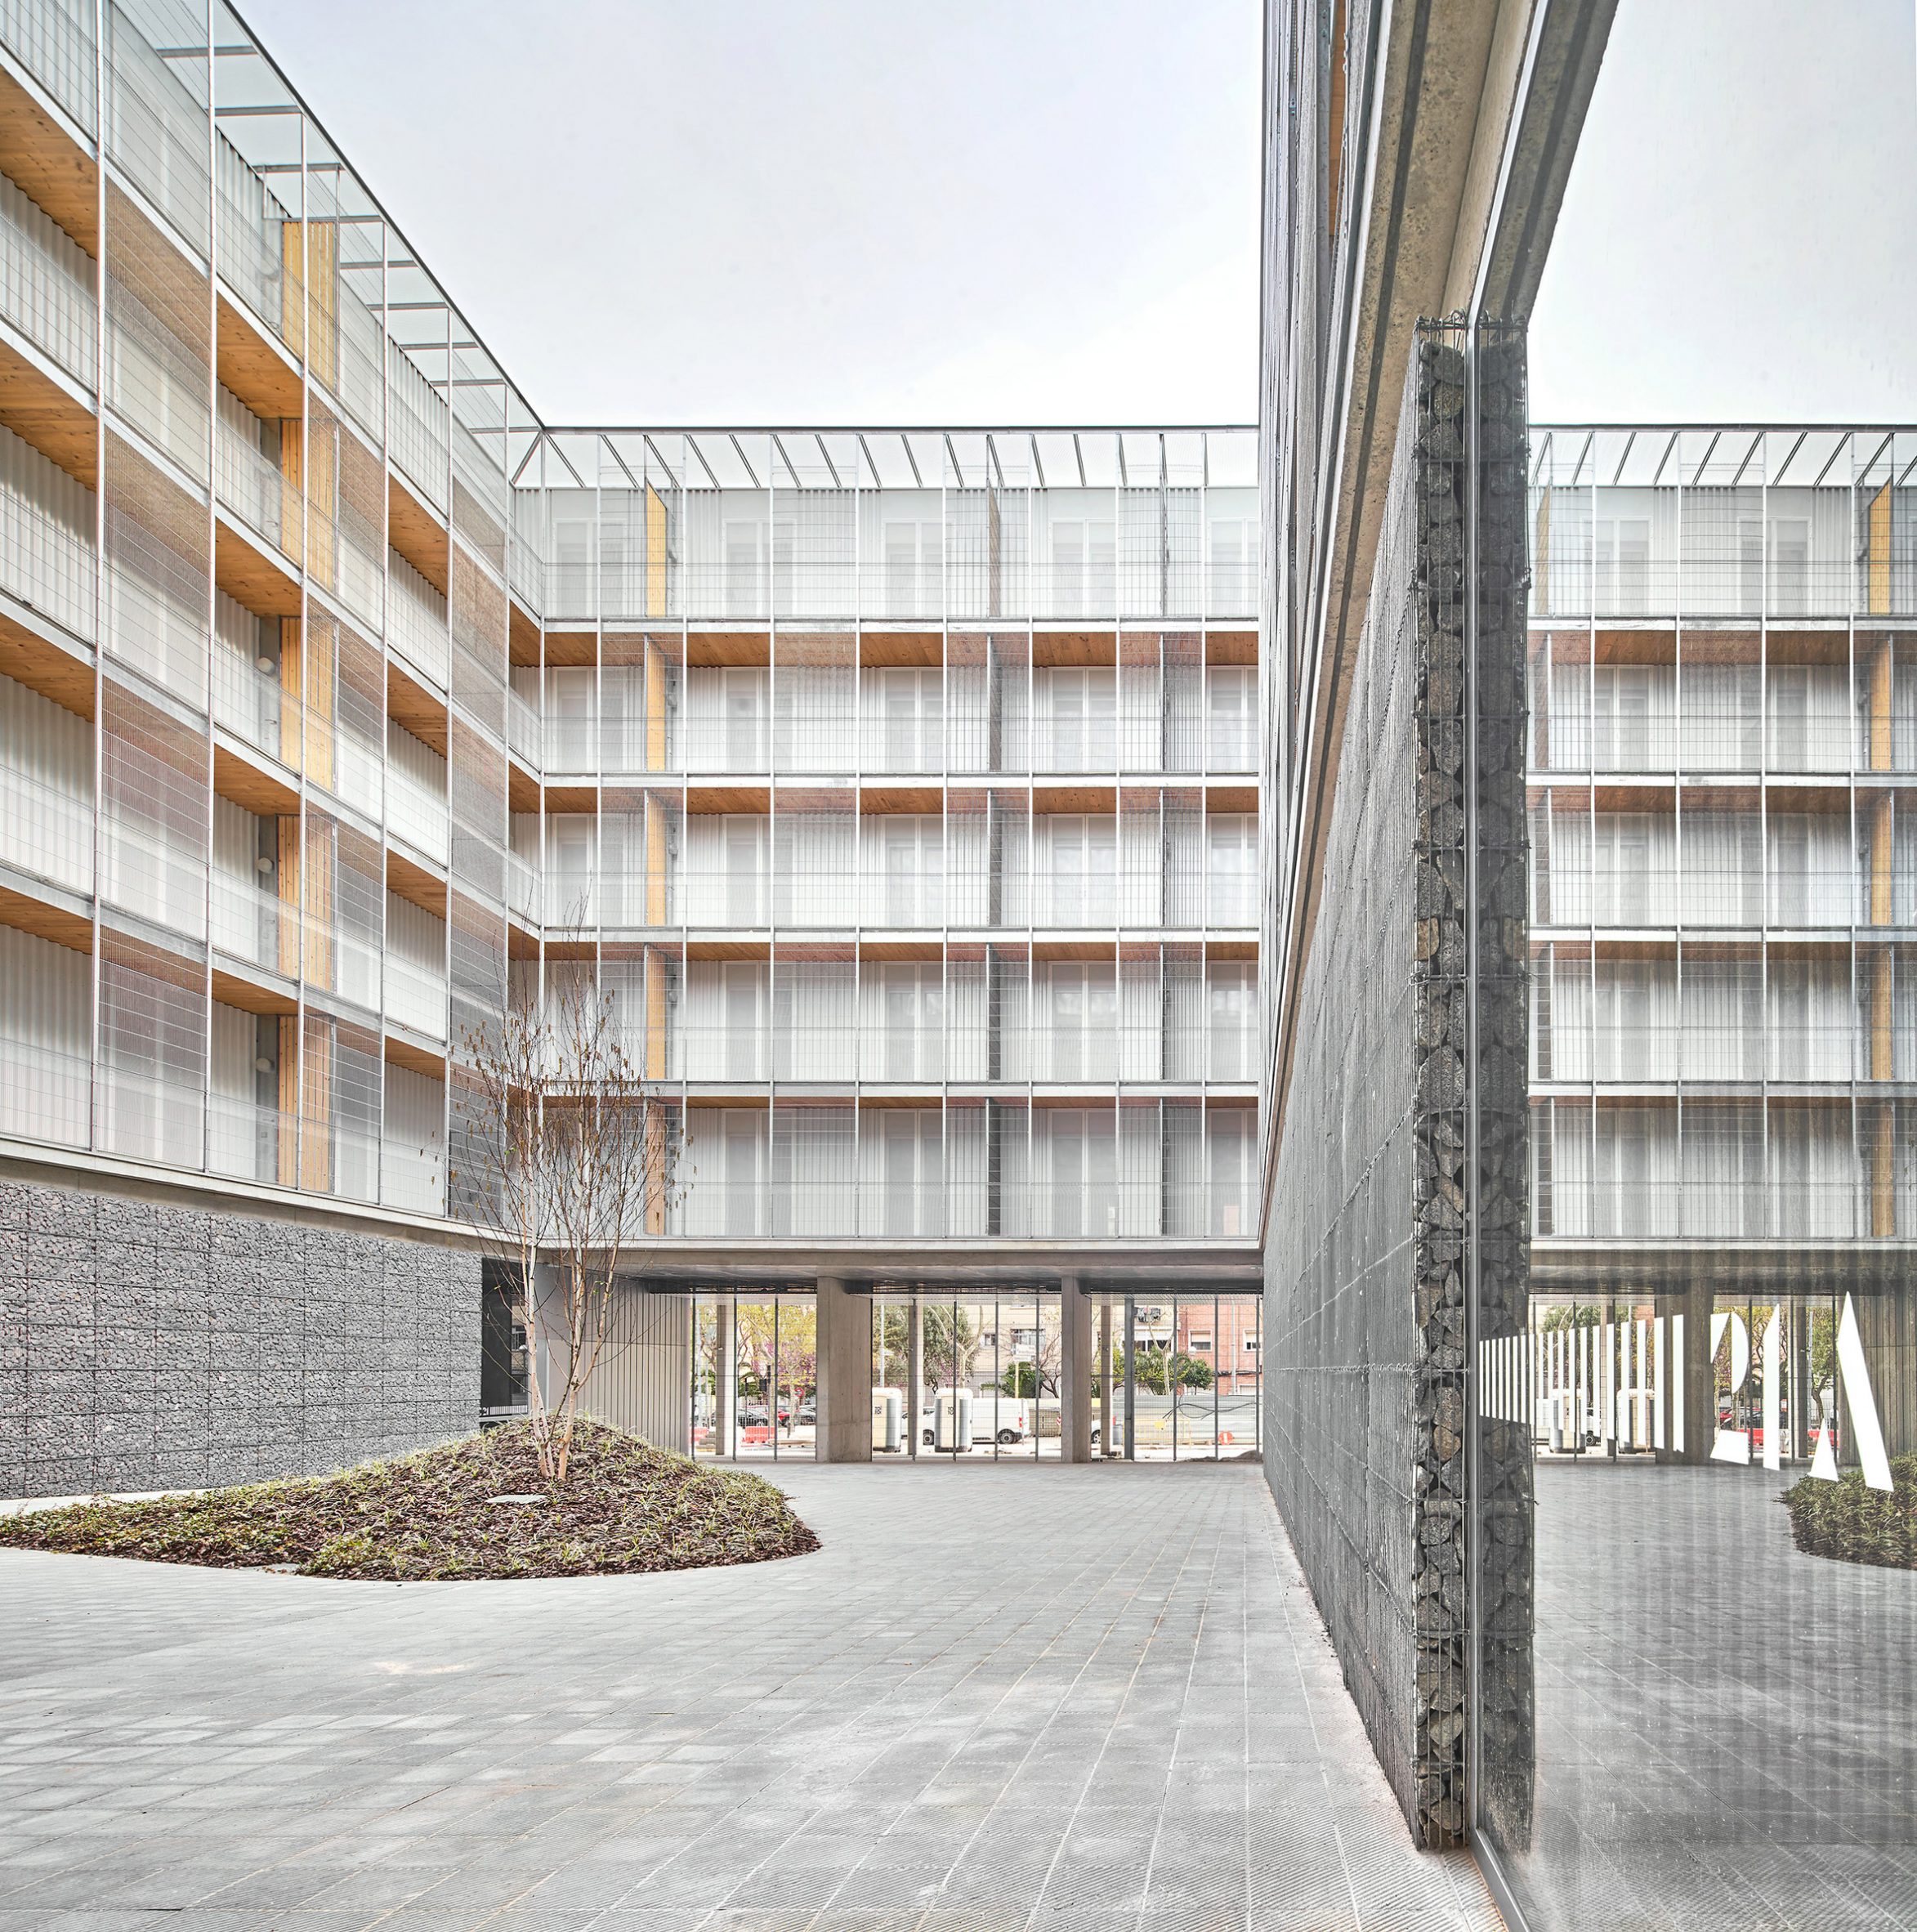 Spanish social housing by Peris+Toral Arquitectes